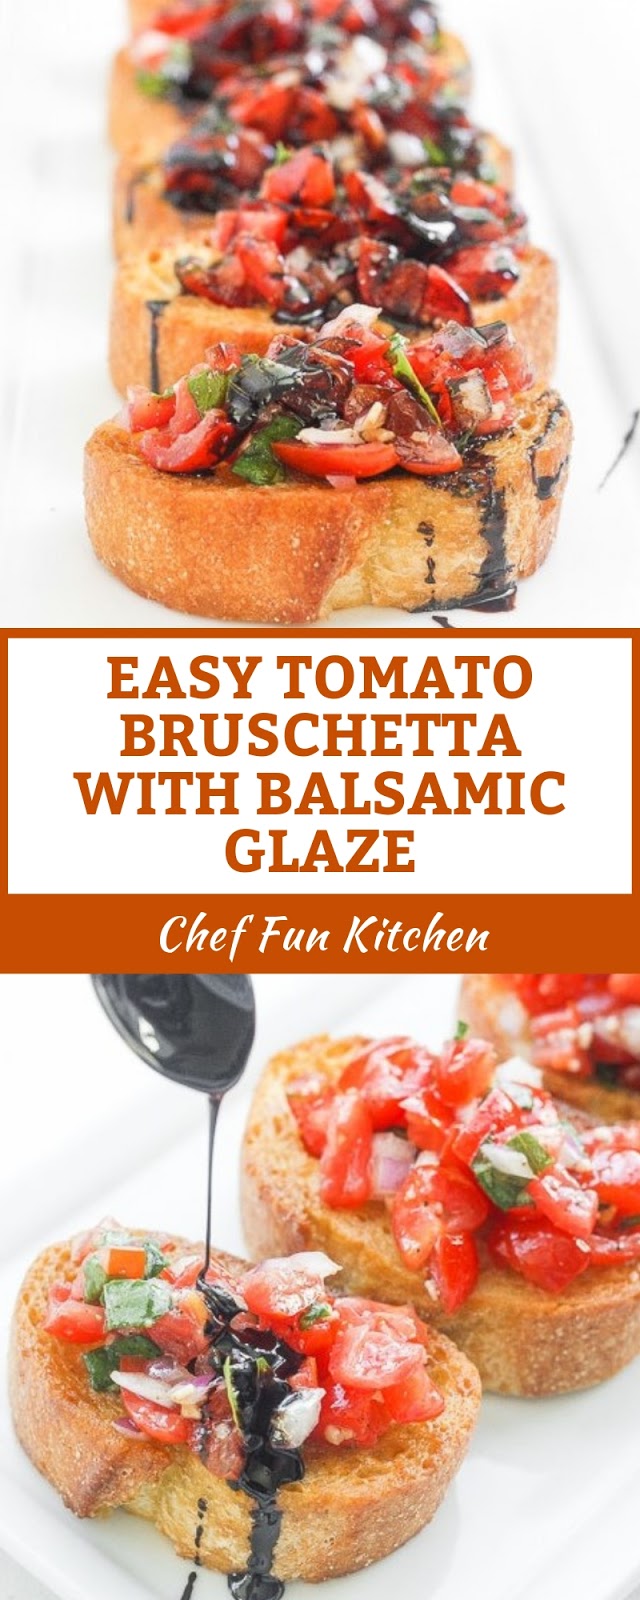 EASY TOMATO BRUSCHETTA WITH BALSAMIC GLAZE